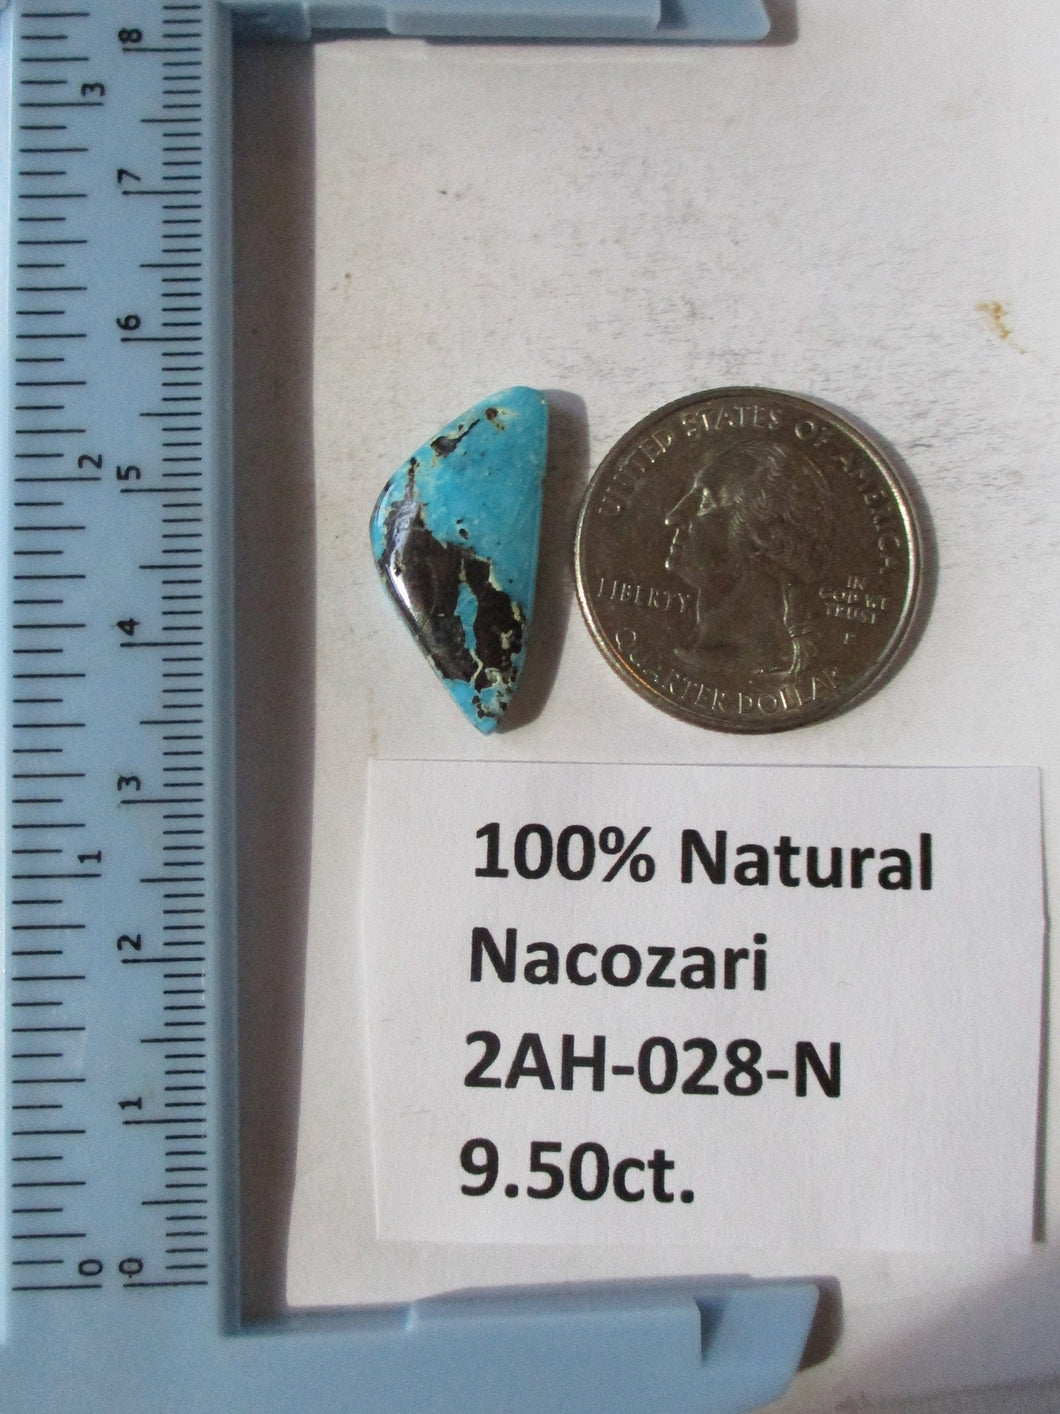 9.5 ct. (24x12x4 mm) 100% Natural Nacozari (Naco) Turquoise Cabochon Gemstone, # 2AH 028 s